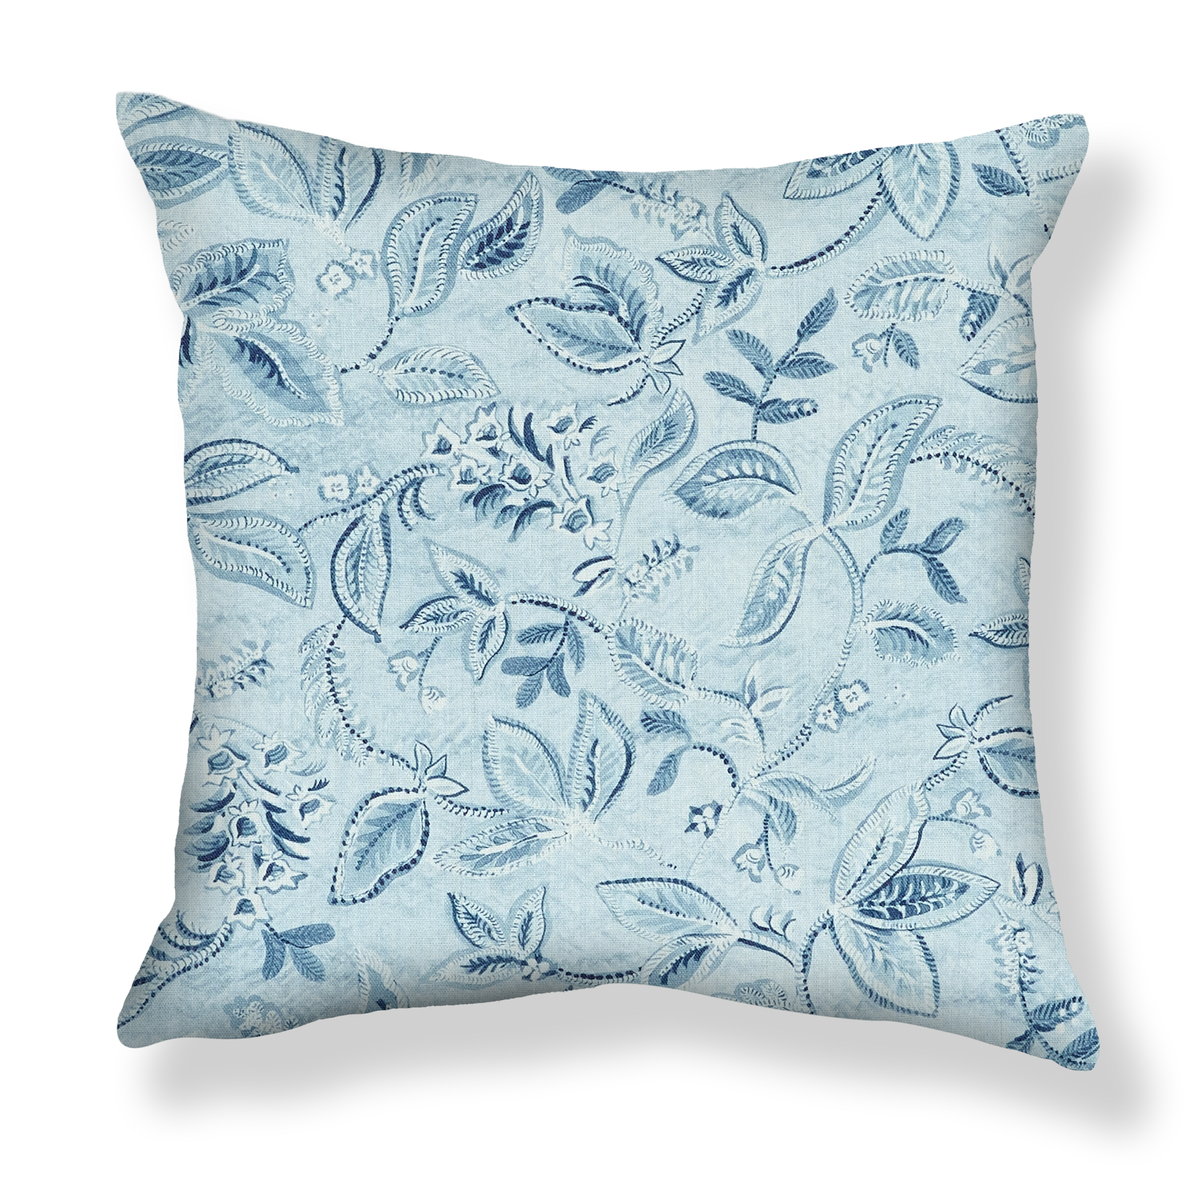 Textured Botanical Pillow in Light Blues